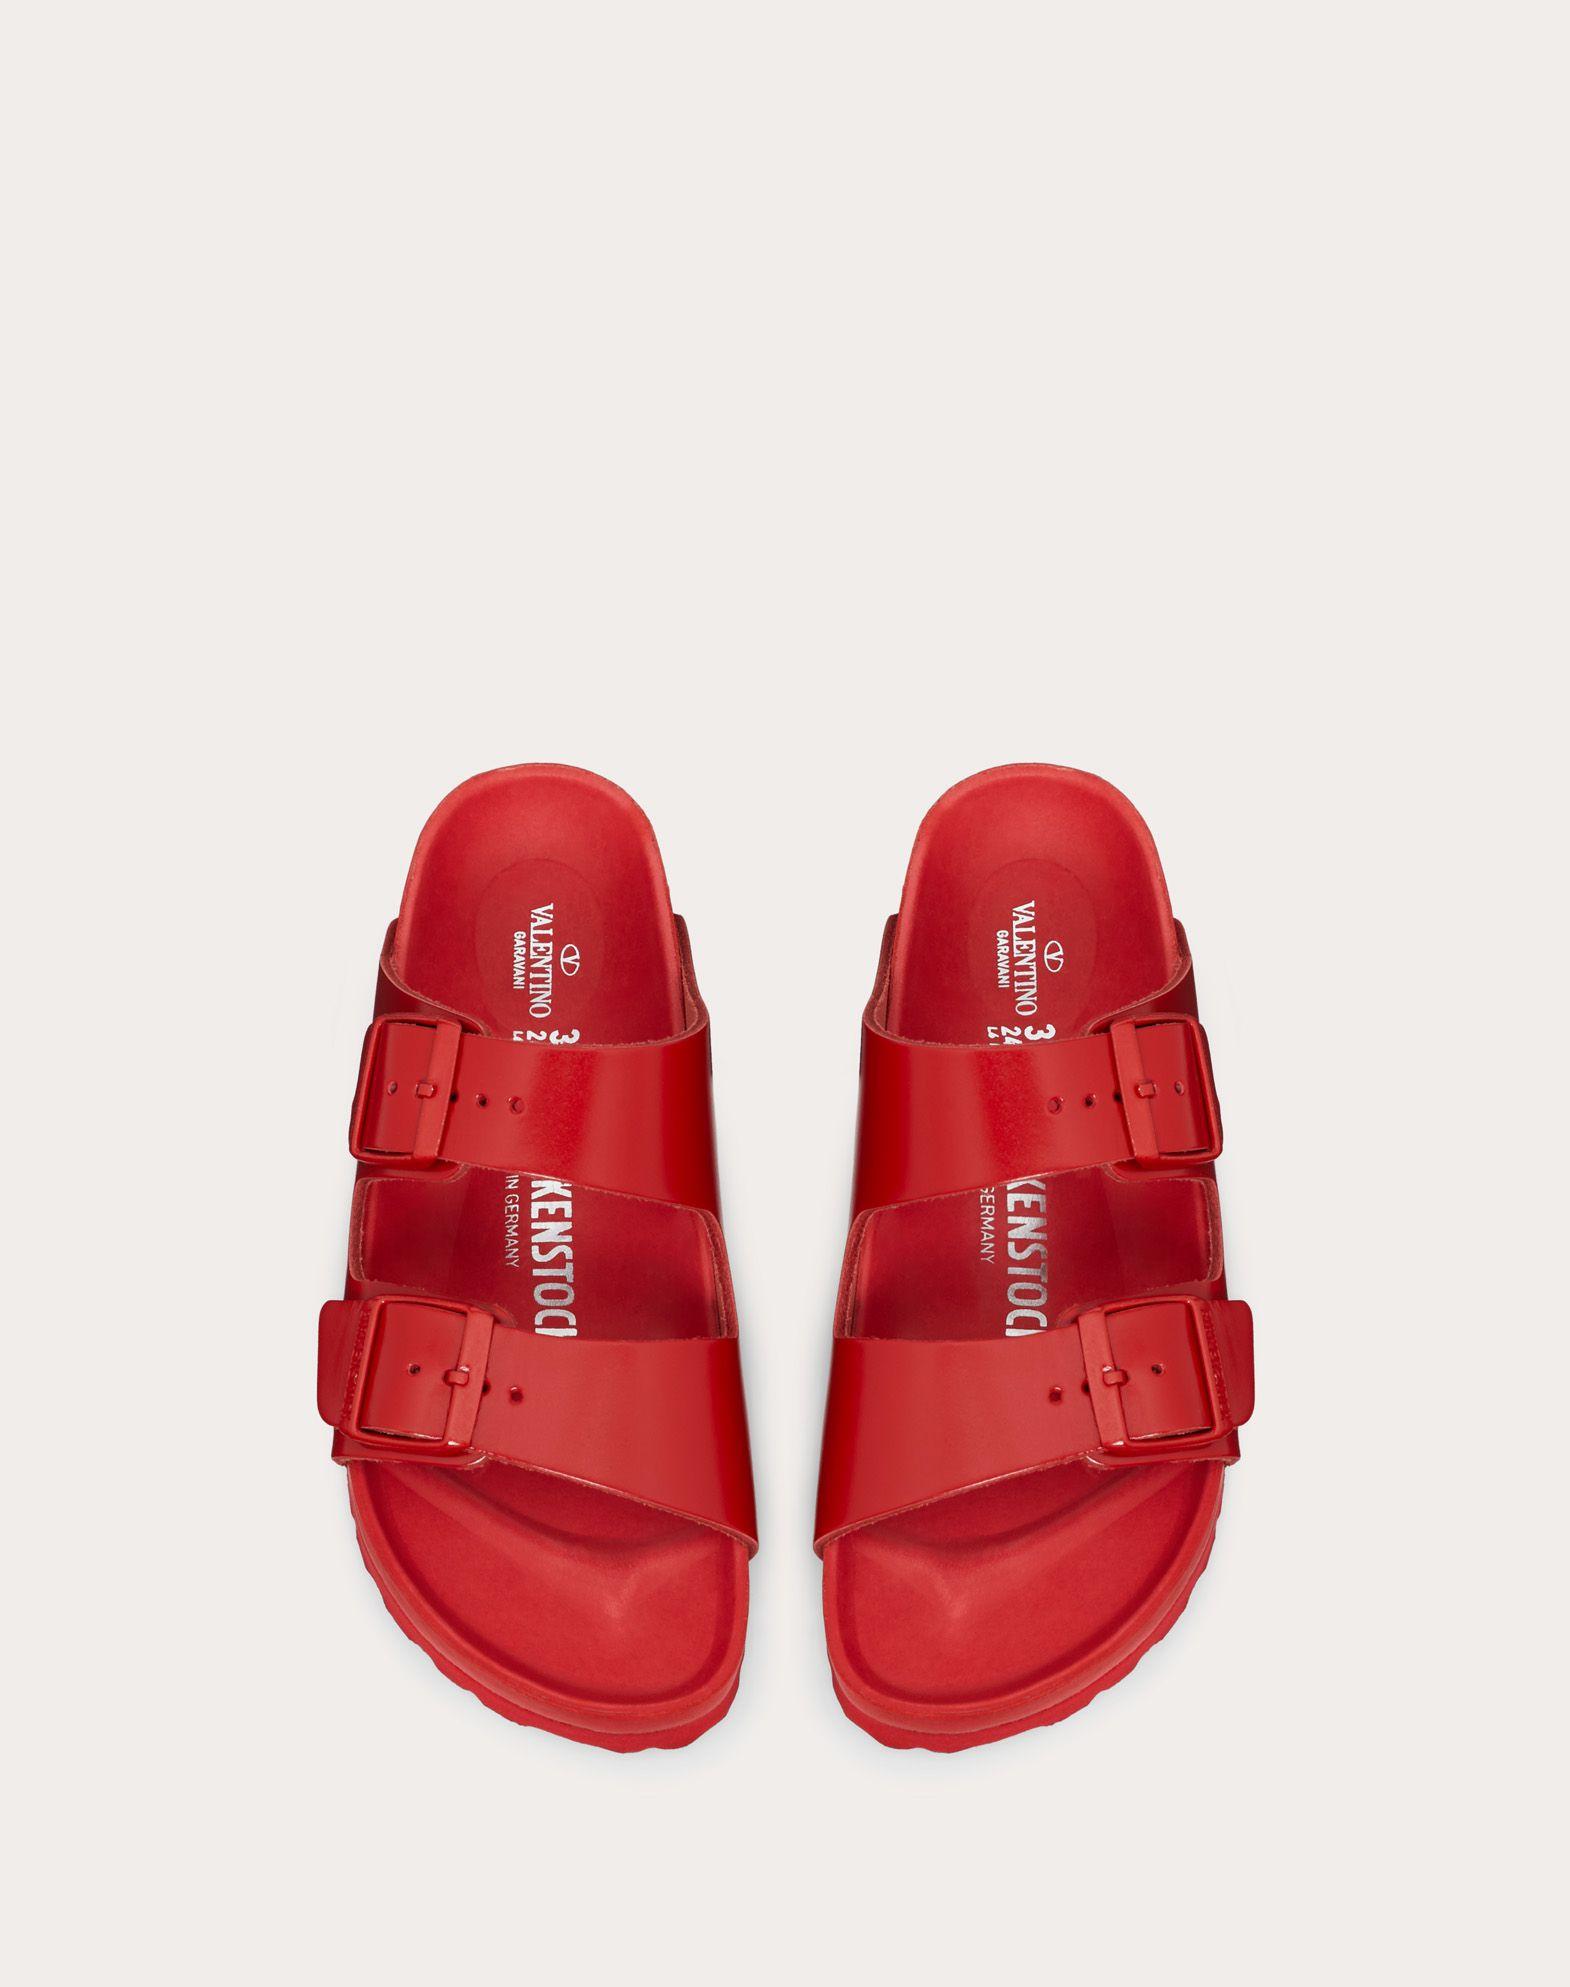 Valentino Birkenstock X Garavani Sandals in Red for Men - Lyst